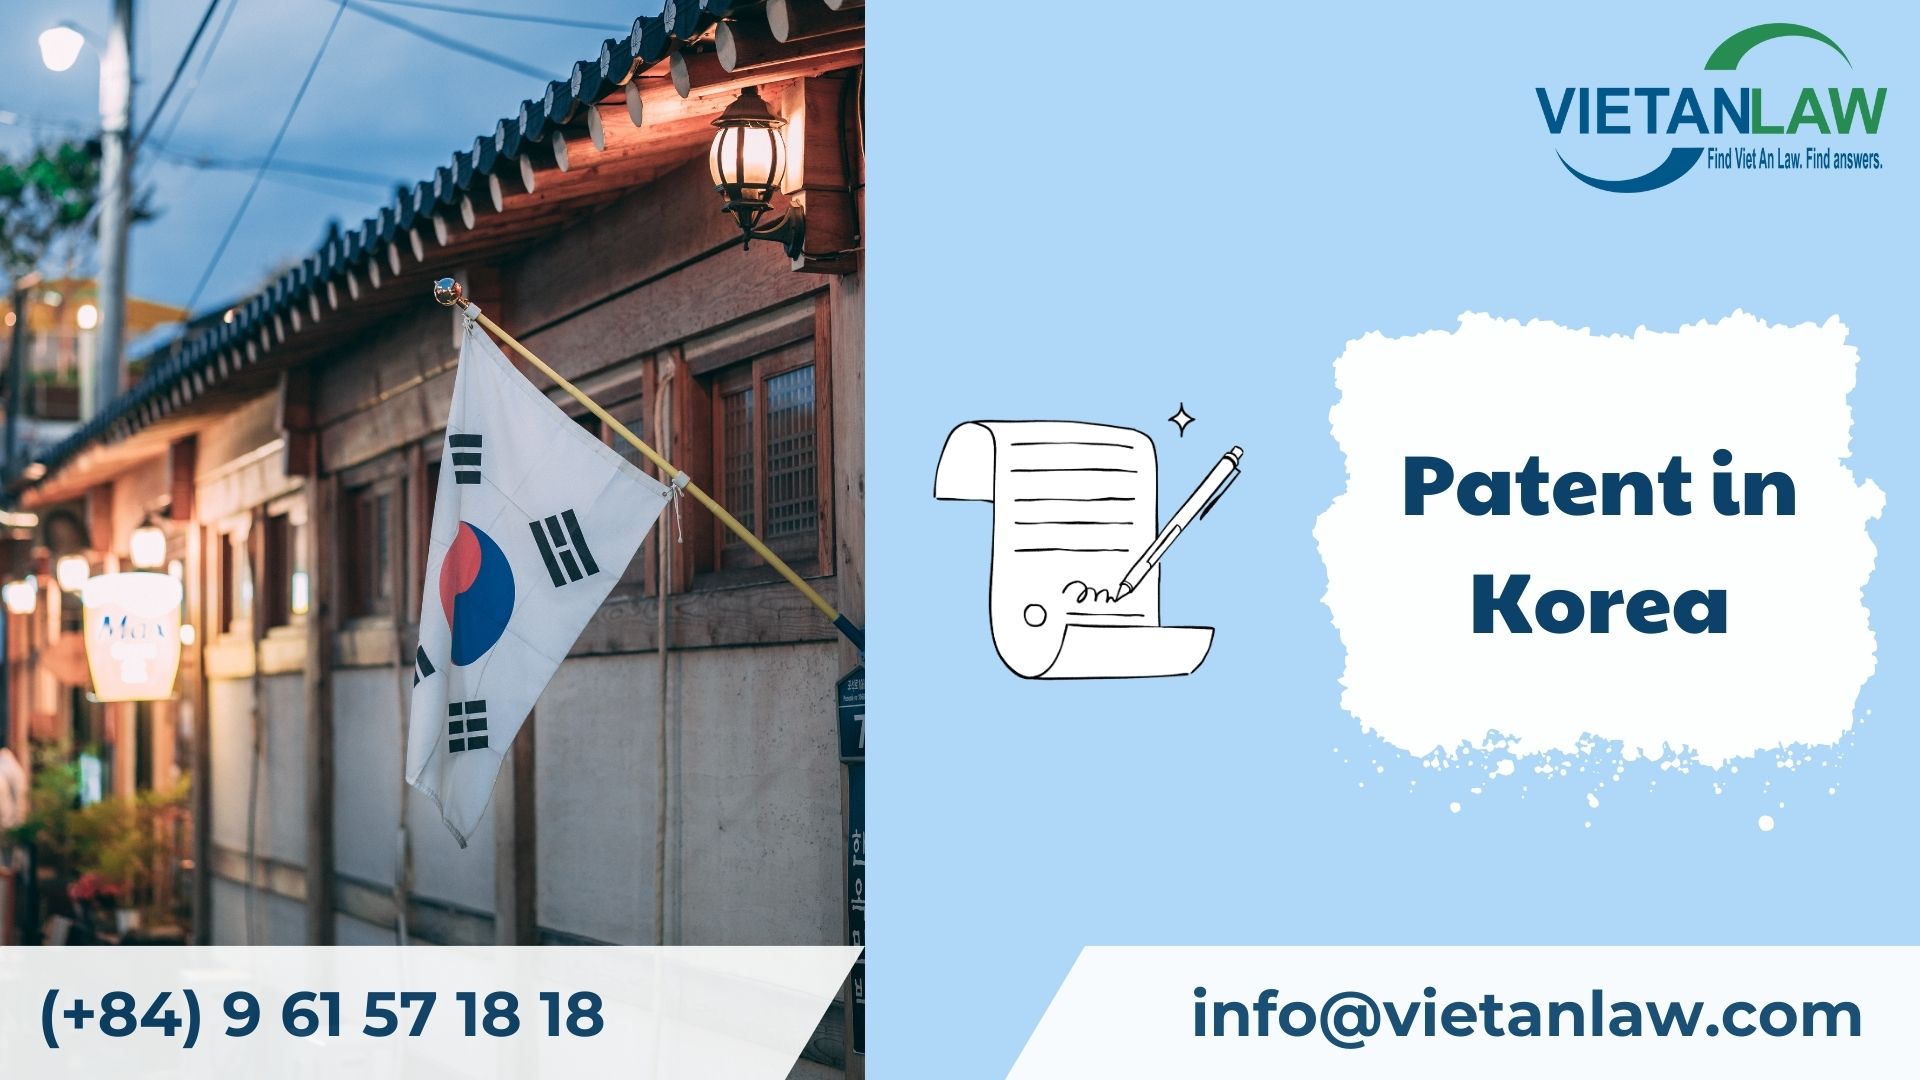 Patent registration in Korea